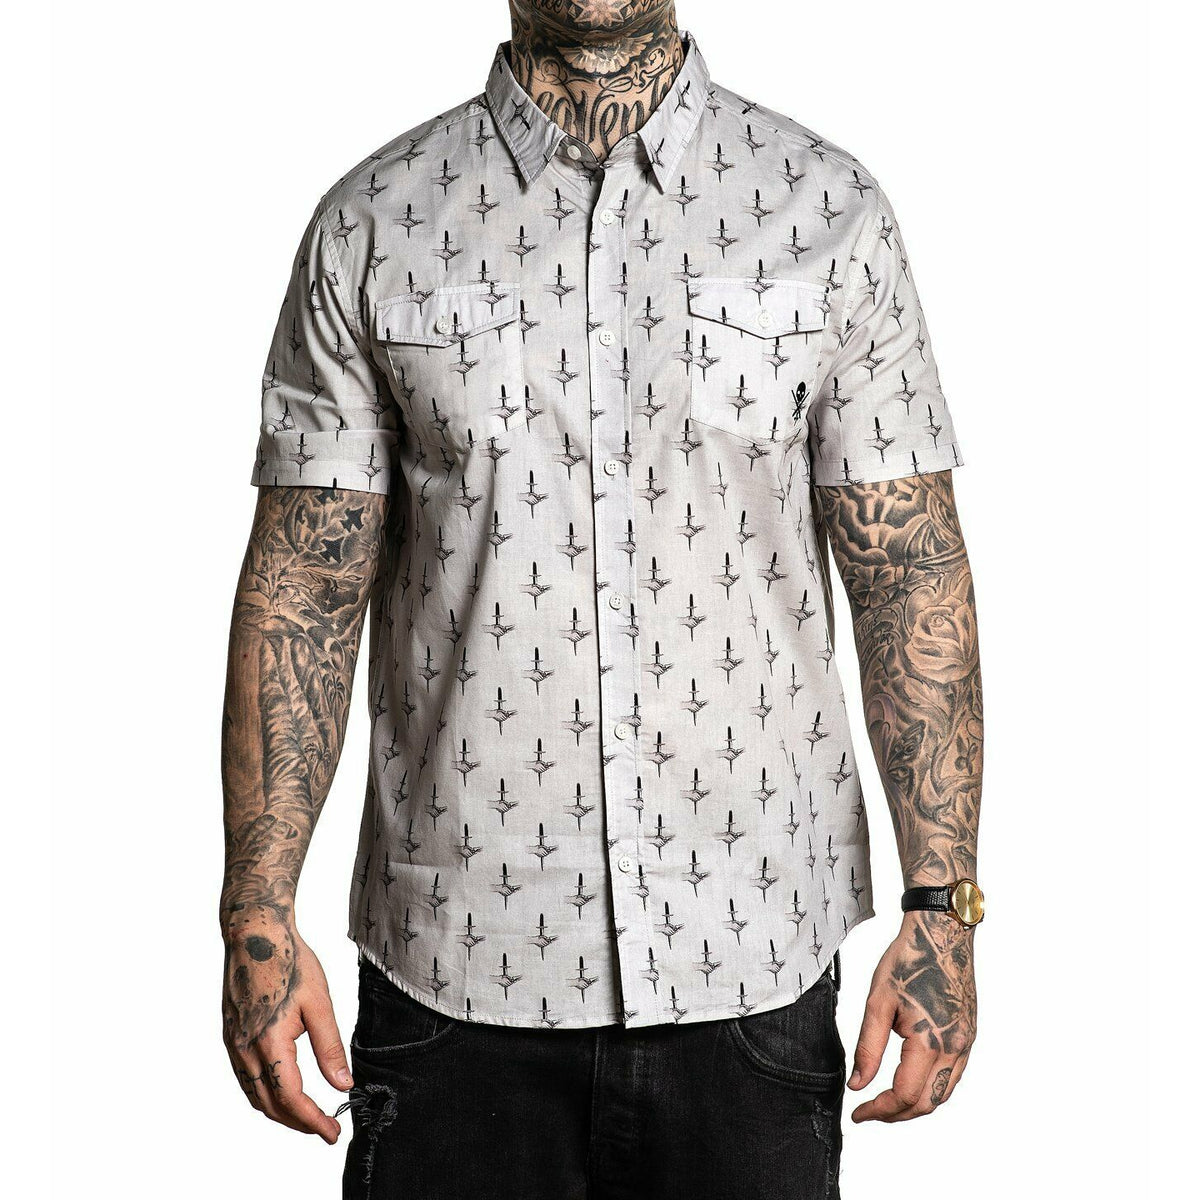 Deal Breaker Button Up Shirt-Mens Casual Shirts-Scarlett Dawn